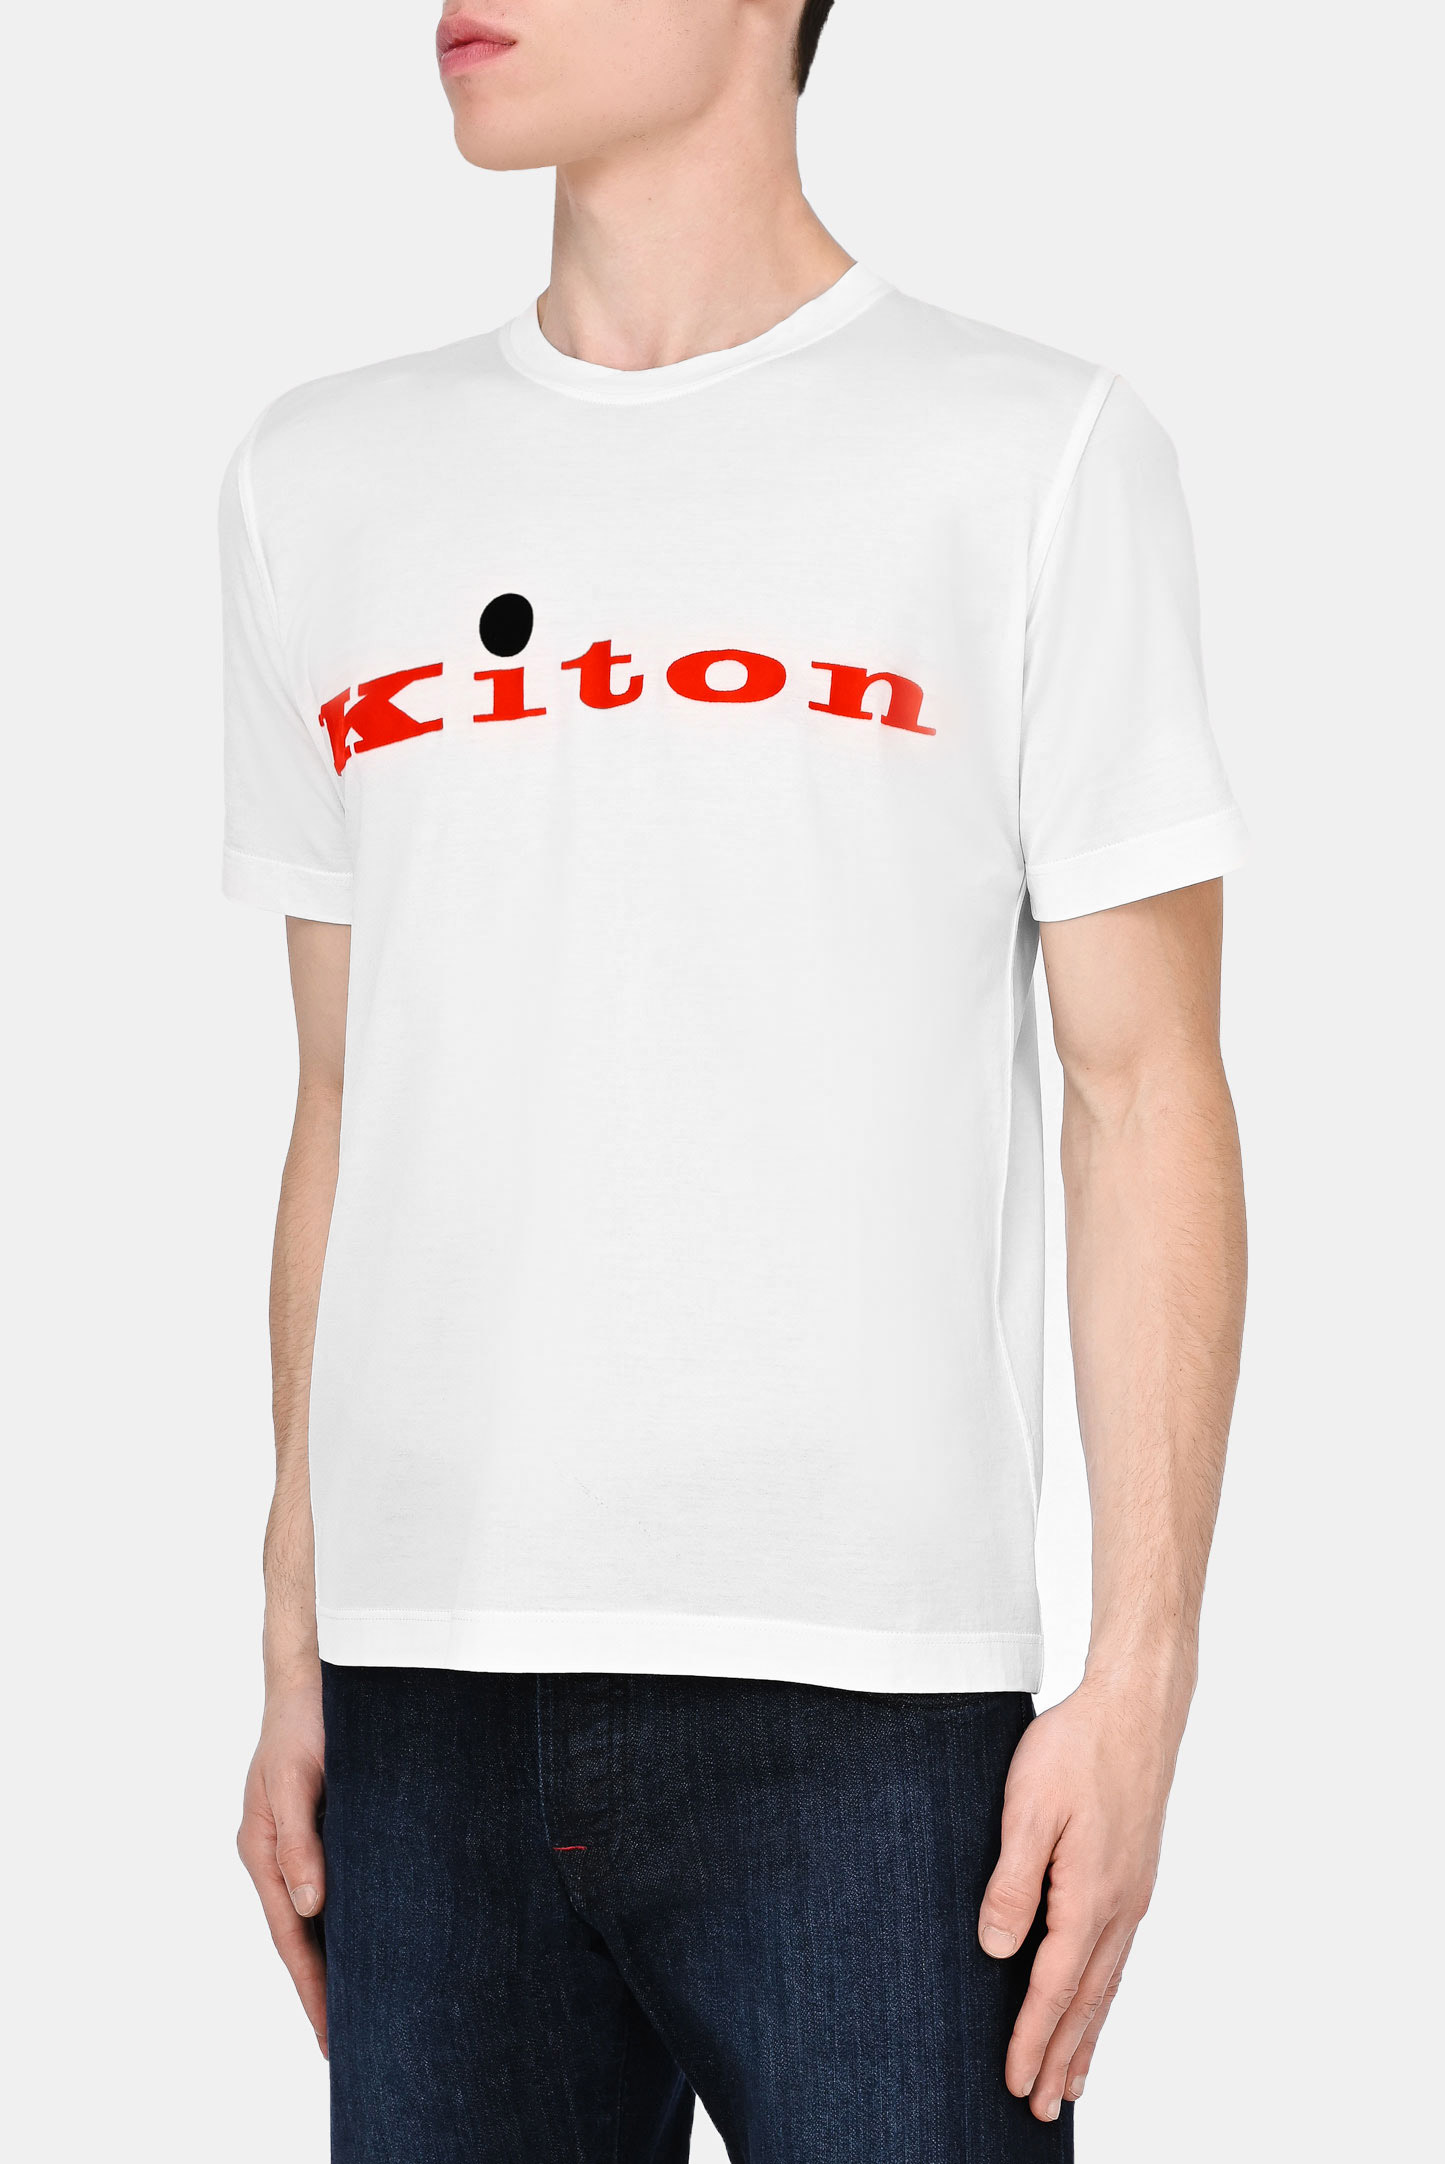 Футболка KITON UK1164W21, цвет: Белый, Мужской